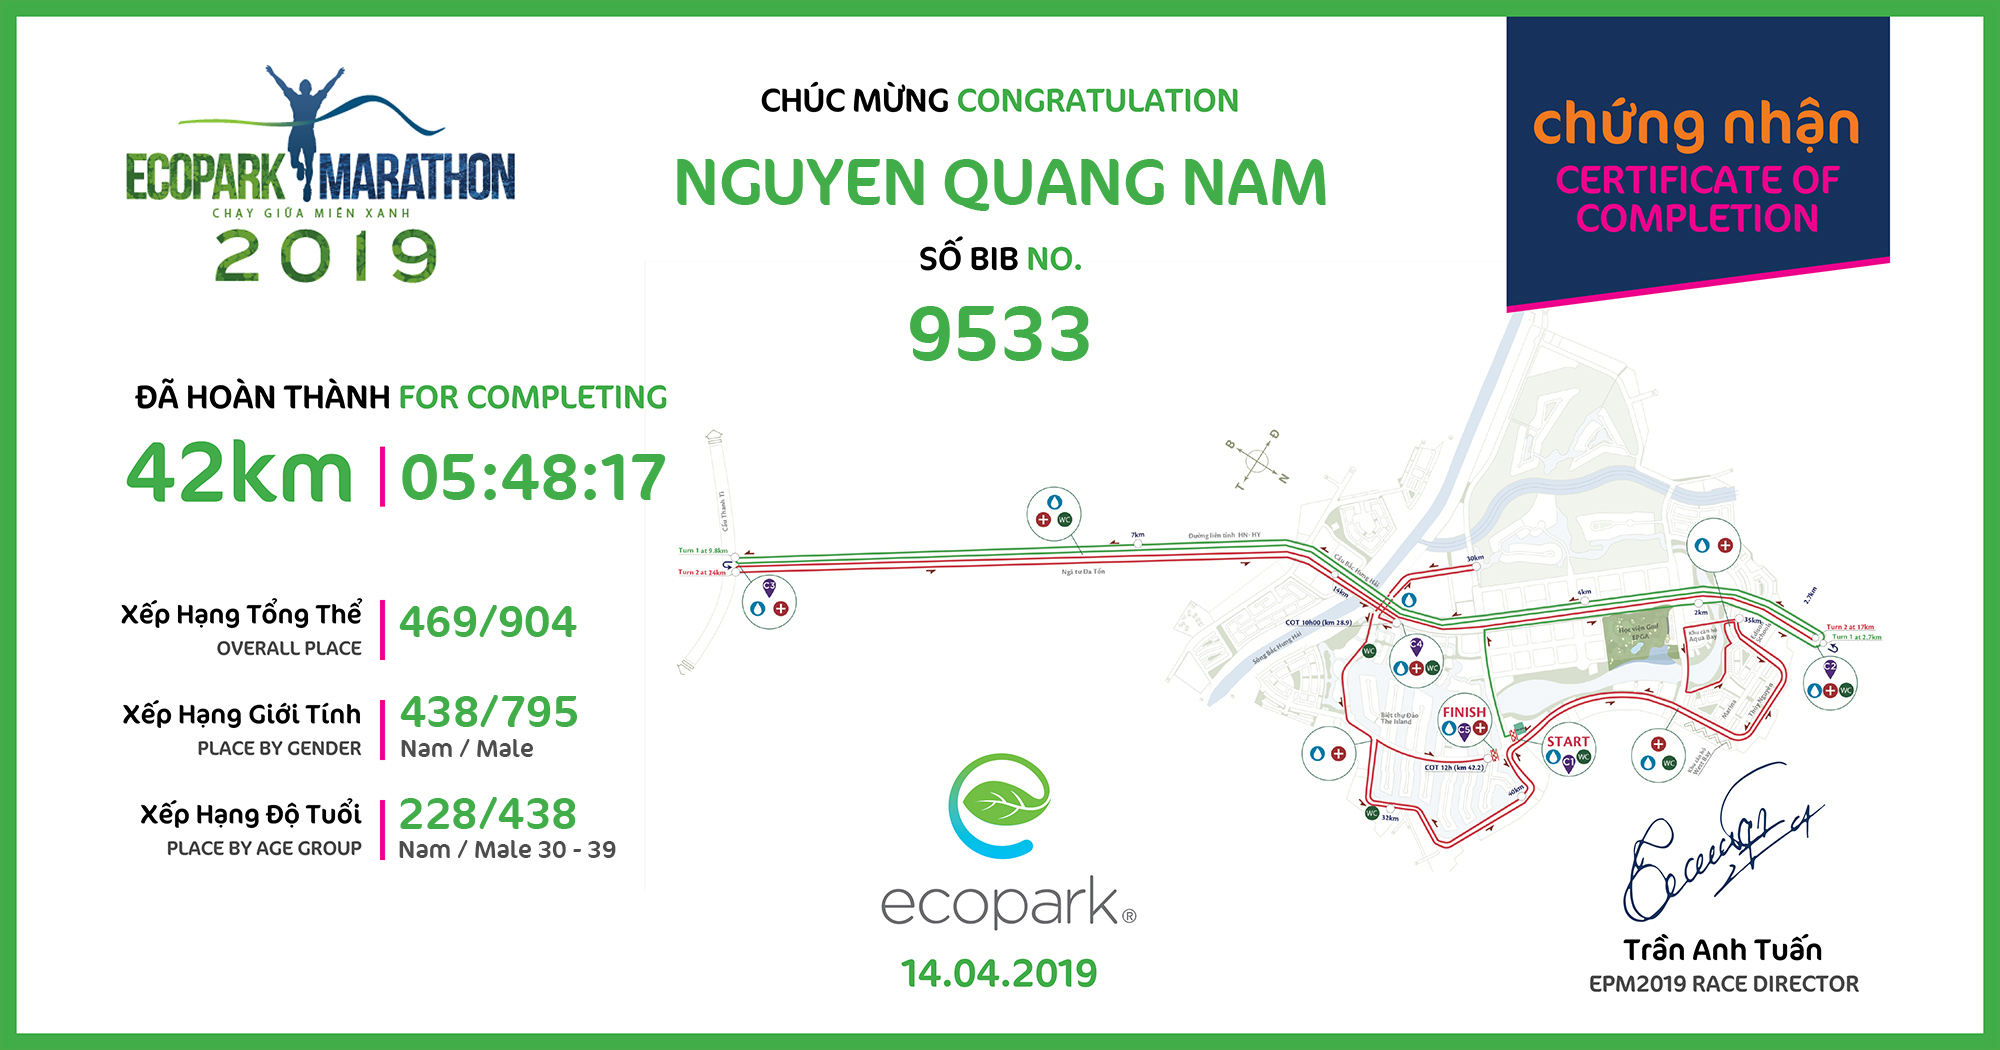 9533 - Nguyen Quang Nam